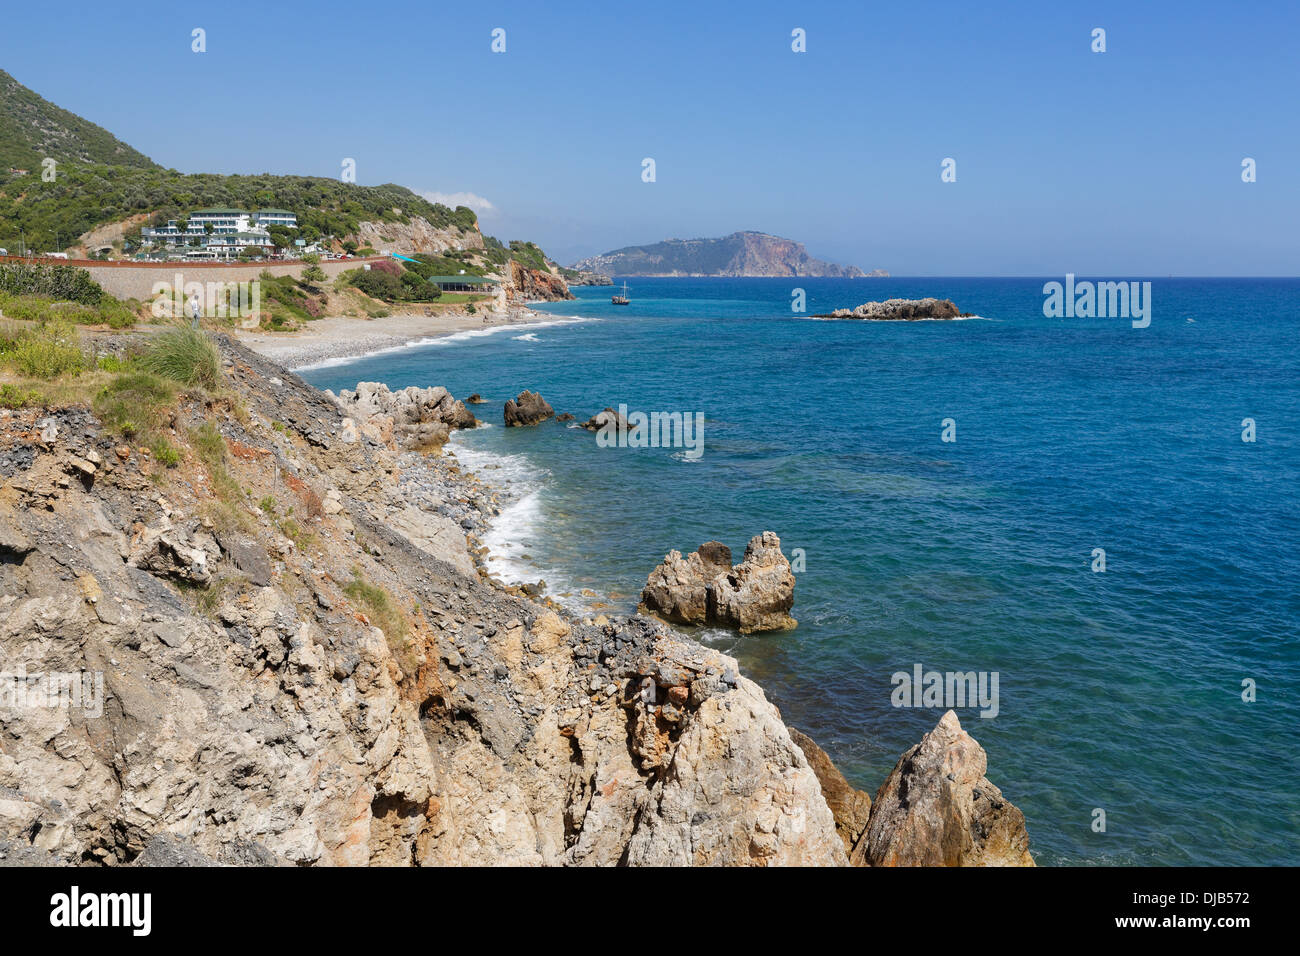 Coast west of Alanya, Turkish Riviera, in the back the castle hill of Alanya, Antalya Province, Turkey Stock Photo